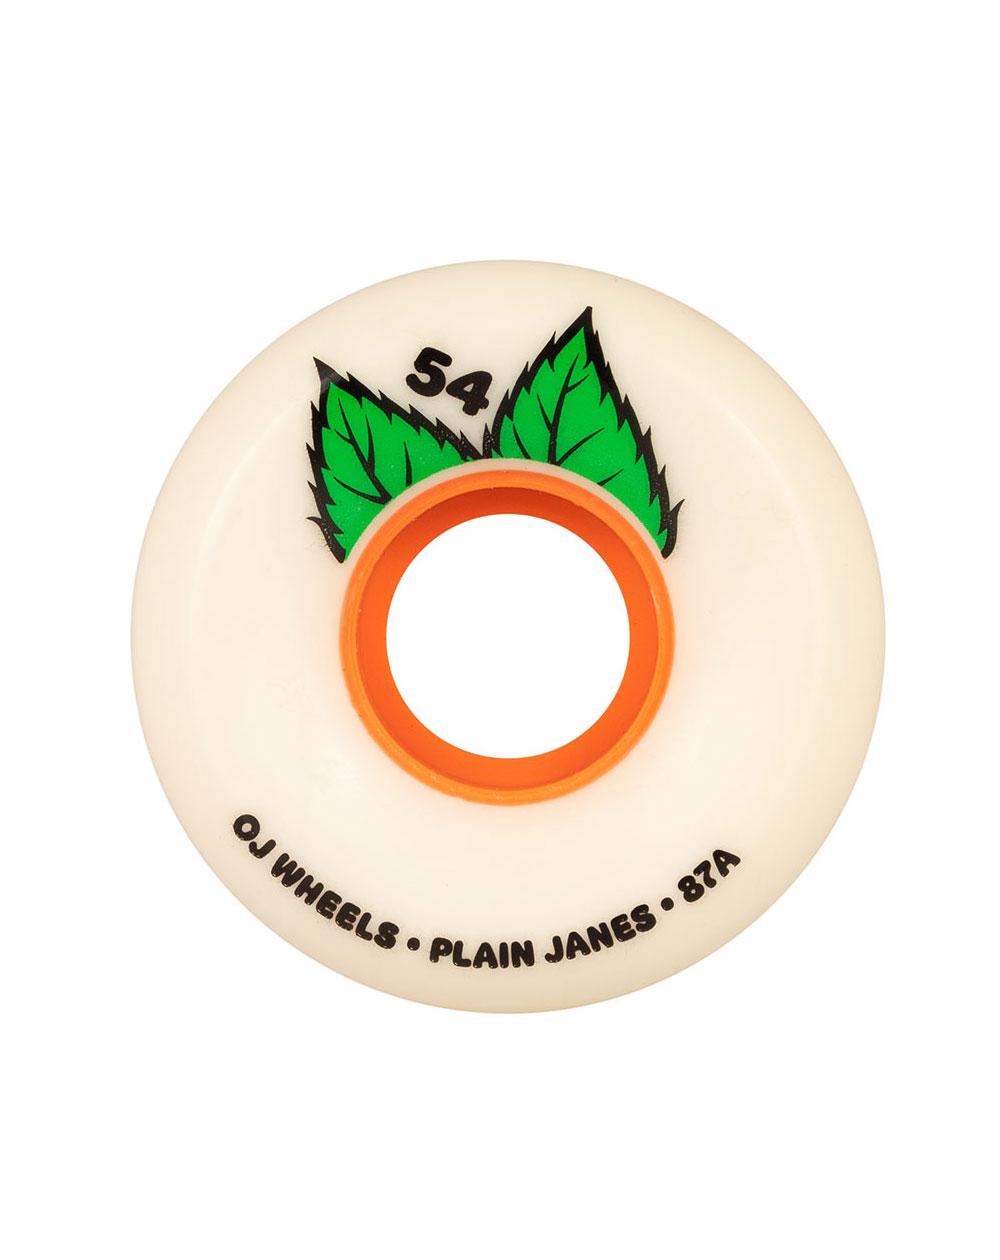 OJ Plain Jane Keyframe 54mm 87A Skateboard Wheels pack of 4